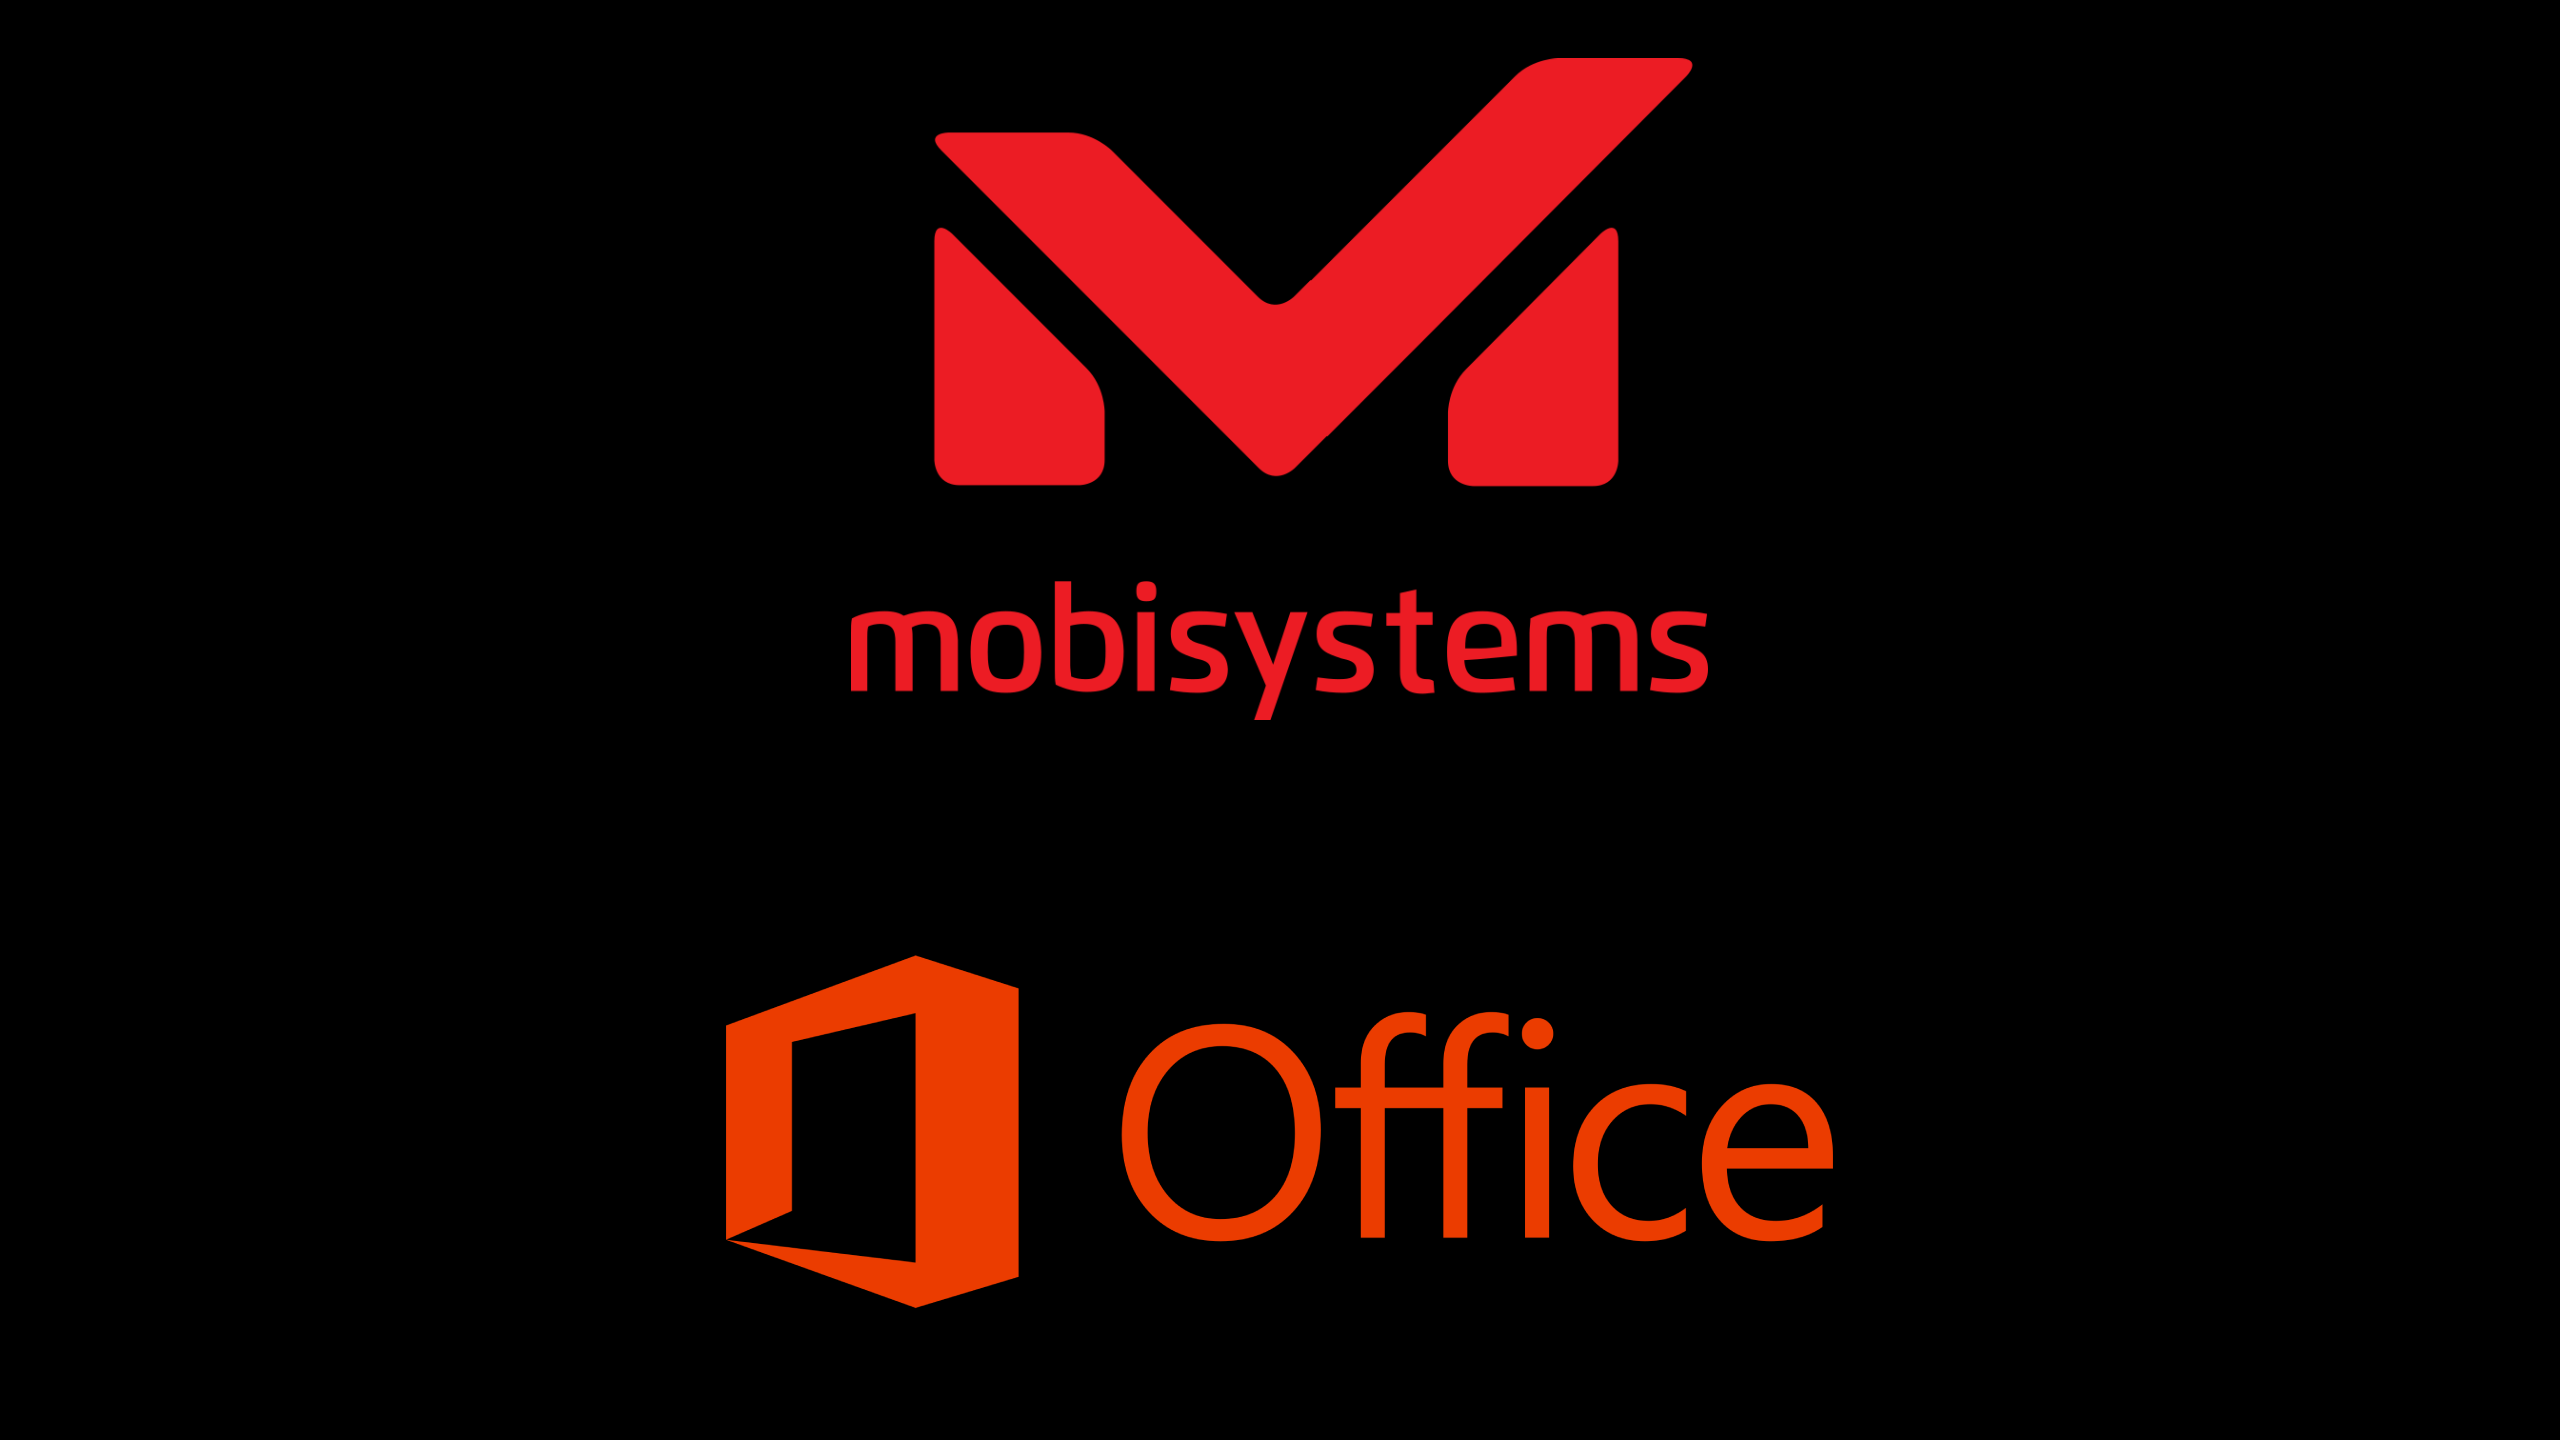 Microsoft Office Suite Vs MobiSystems Office Suite: Ultimate Comparison